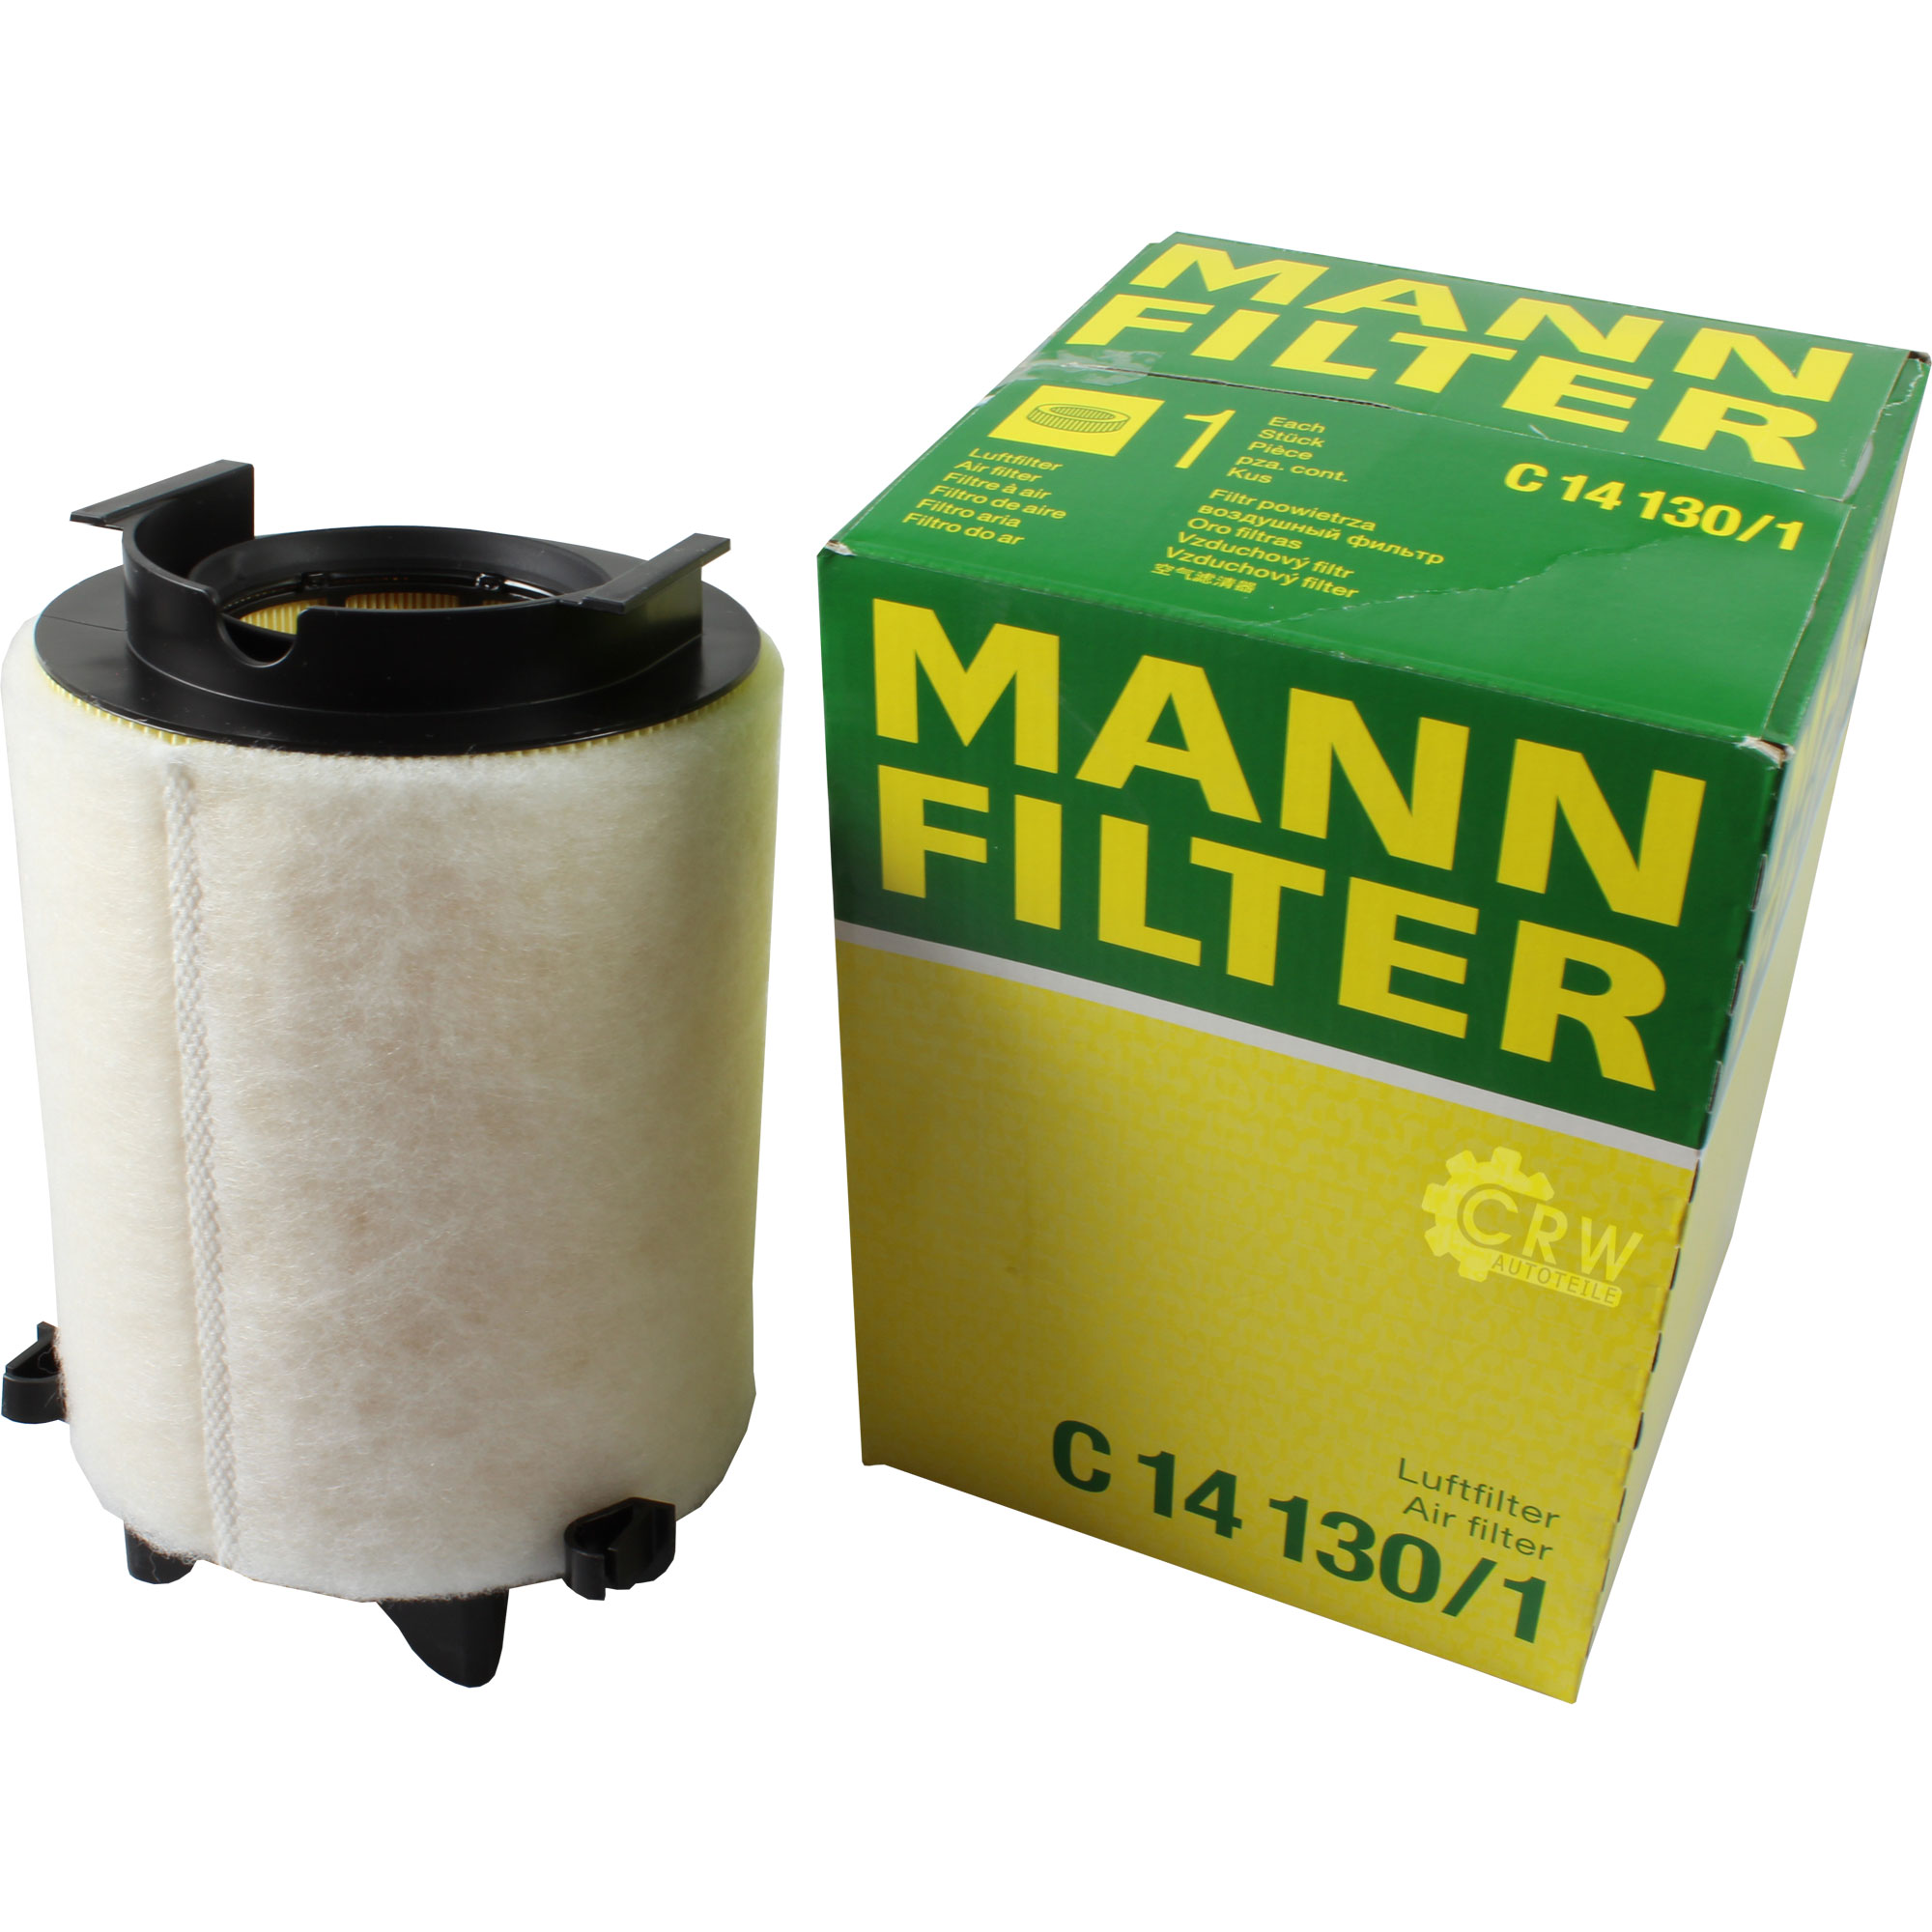 MANN-FILTER Luftfilter für VW Golf V 1K1 1.6 1.4 TSI 5K1 1.2 5M1 521 Audi A3